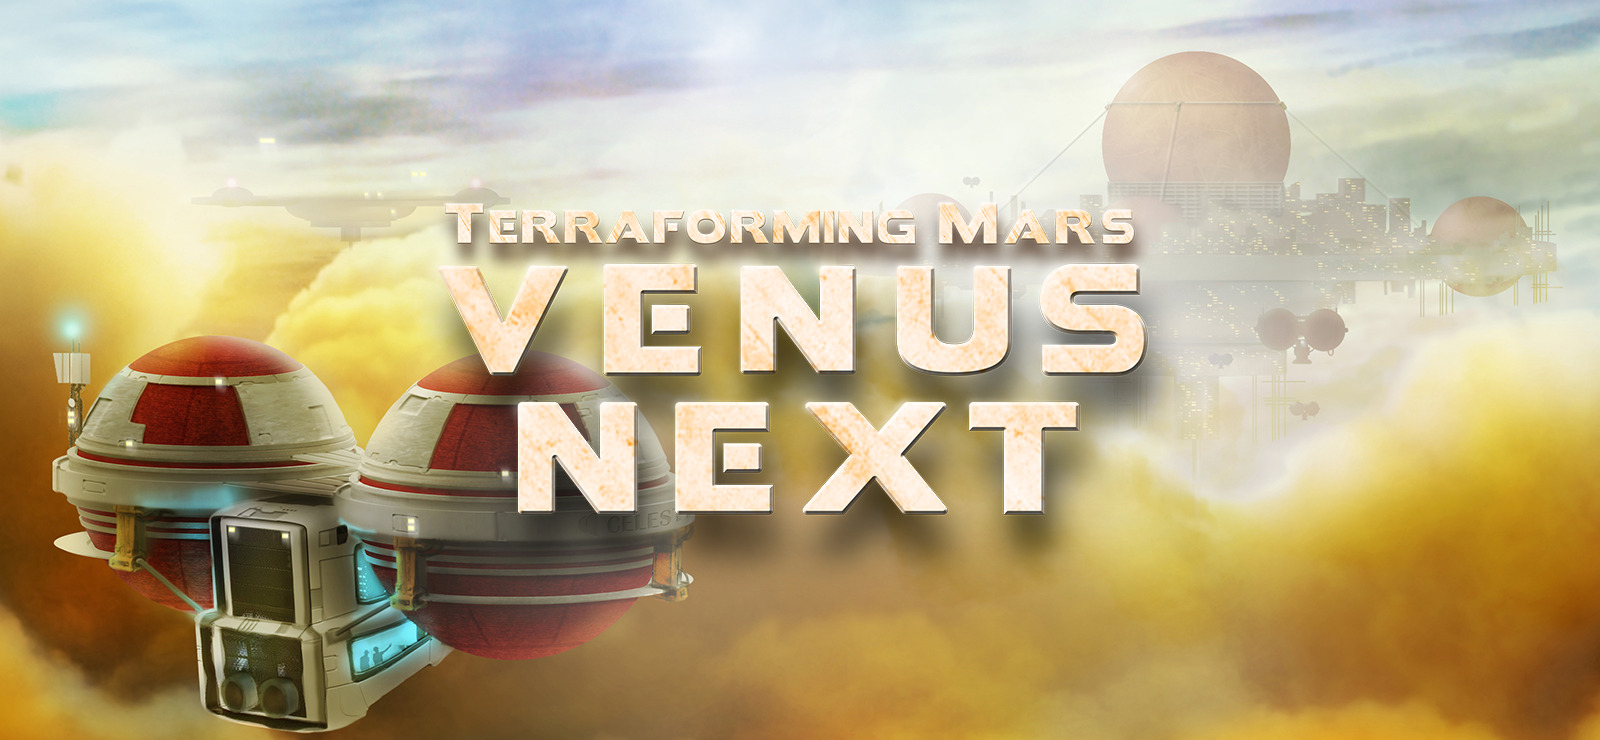 Terraforming Mars - Venus Next on